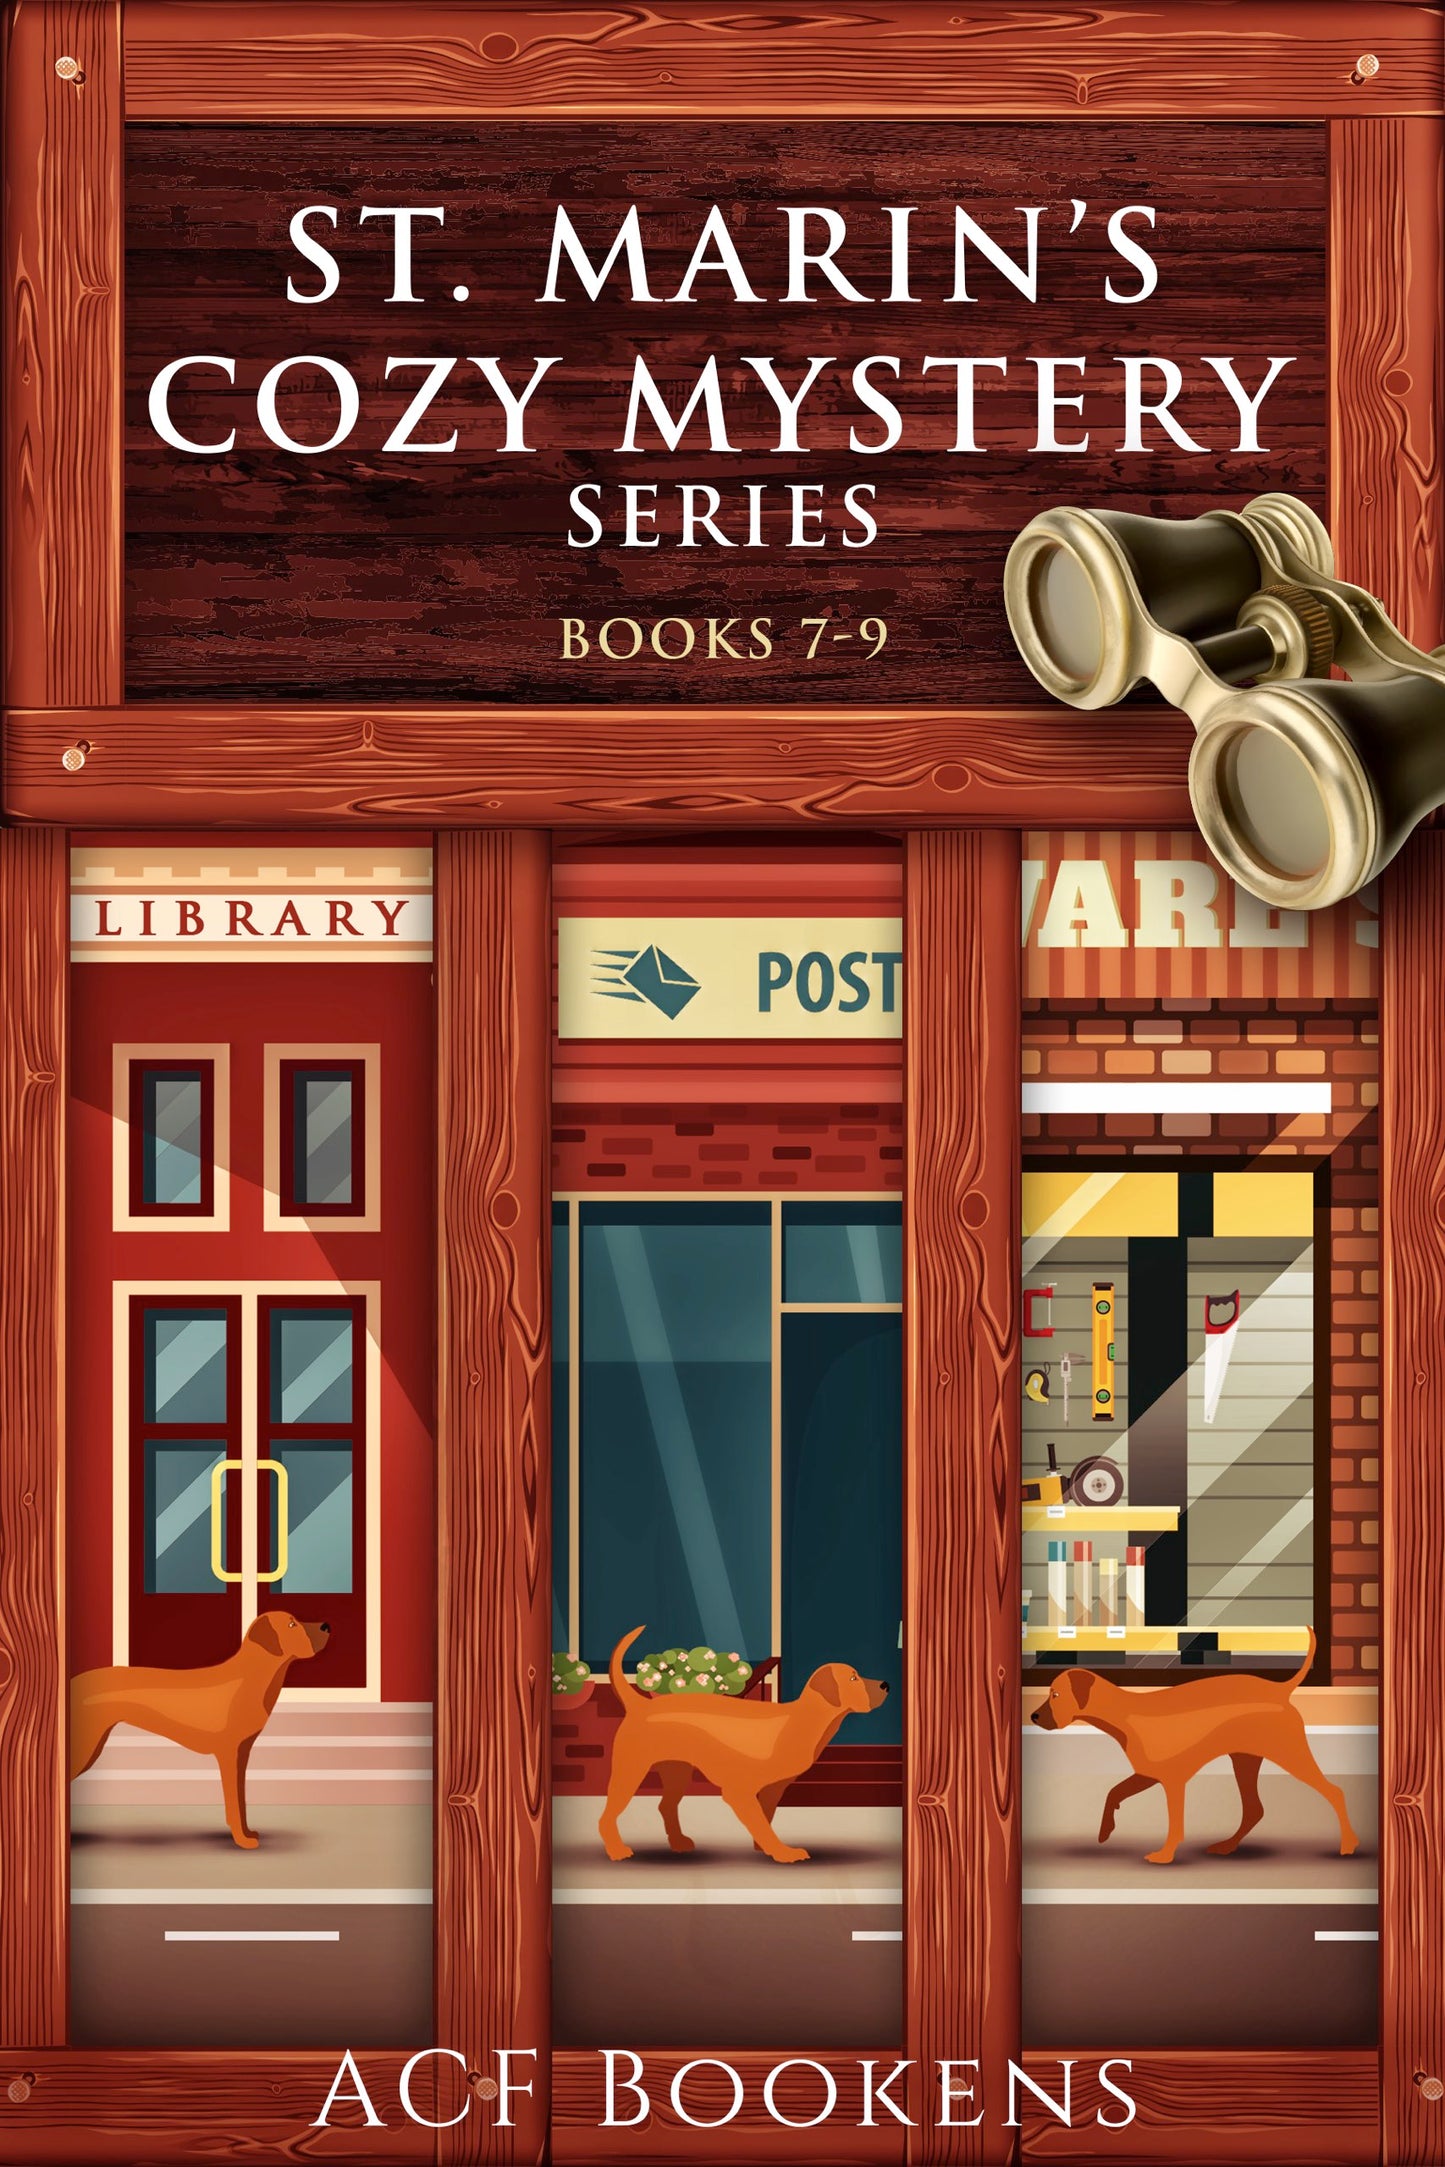 St. Marin's Cozy Mystery Series Box Set, Volume 3 (Books 7-9)